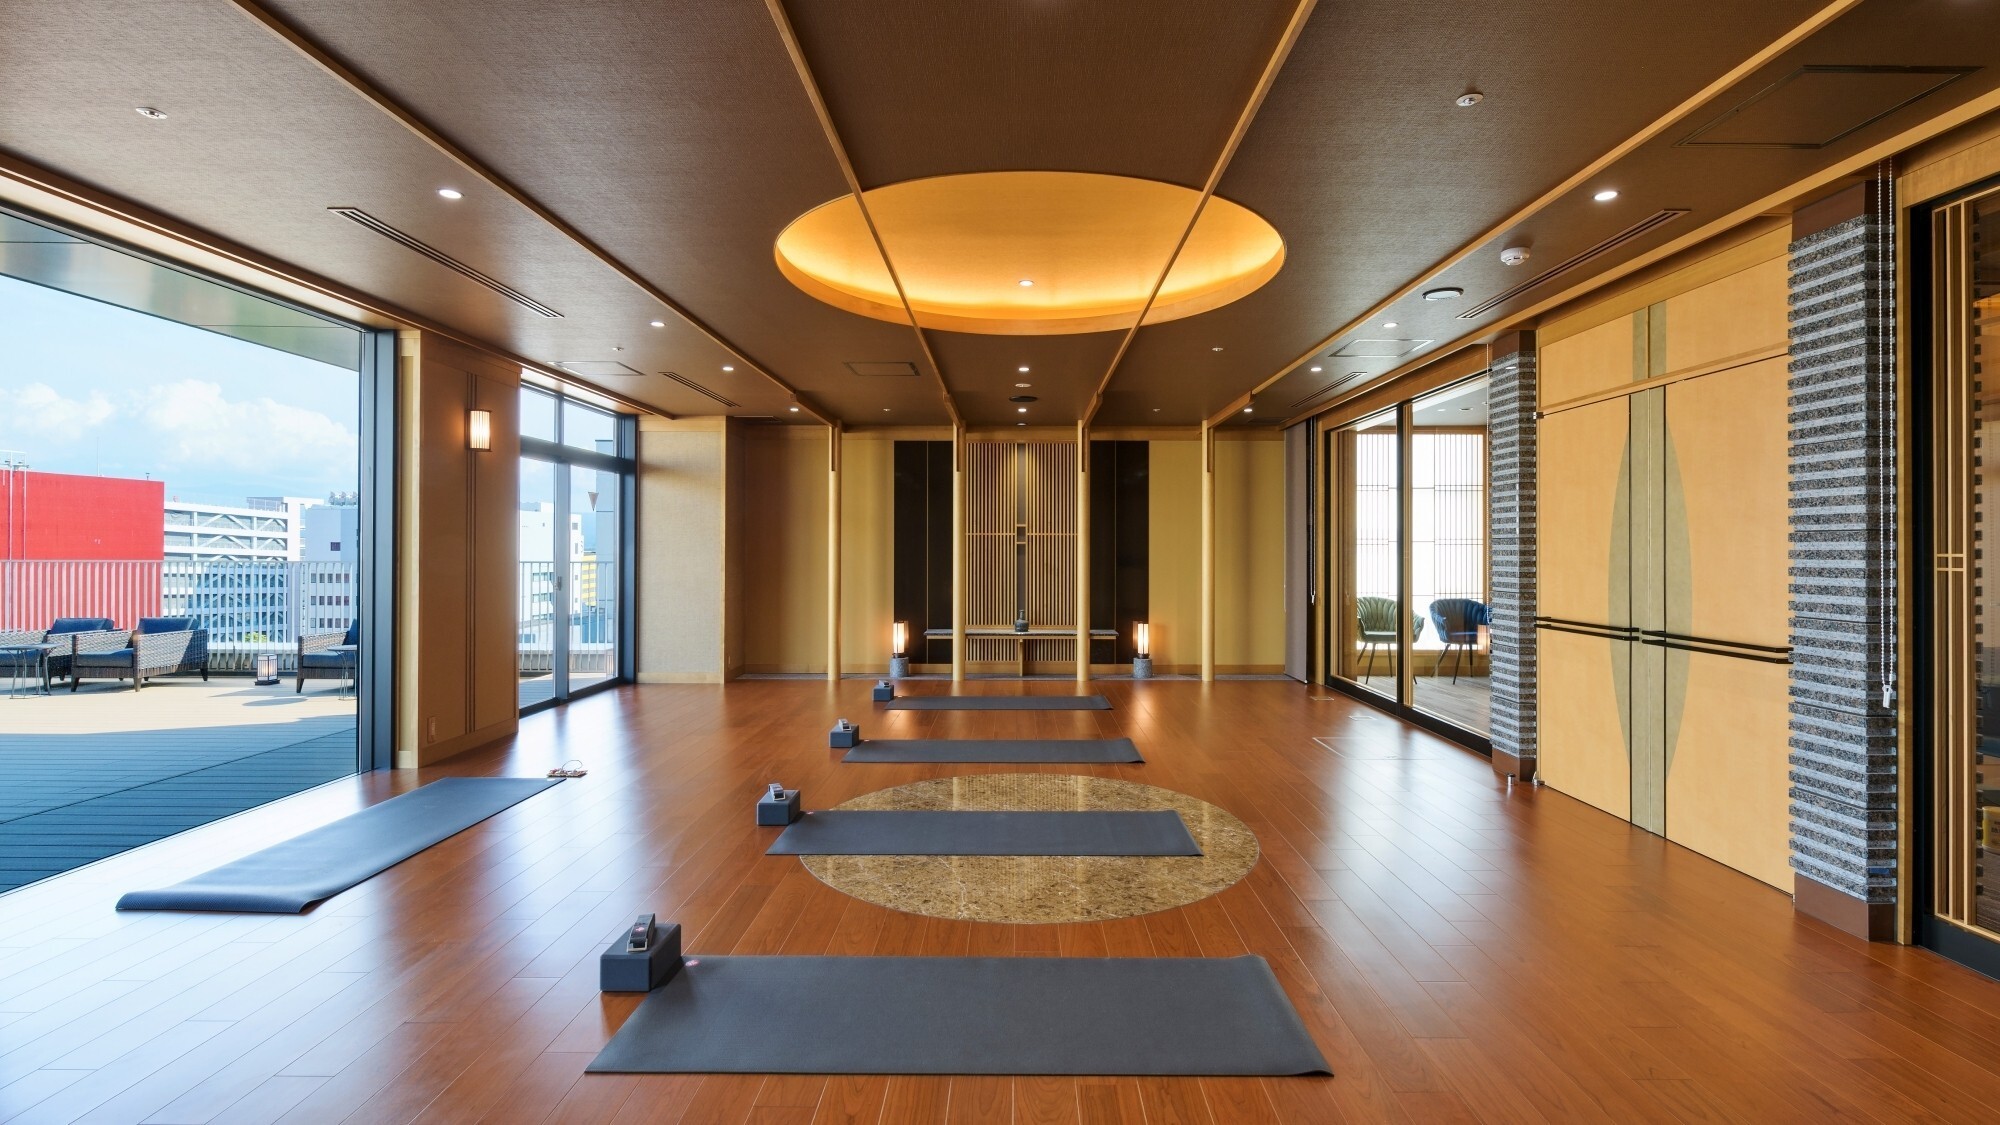 【YogaFit Studio禅】和の設計匠・松葉啓氏によってデザインされた、禅を意識した和の空間。